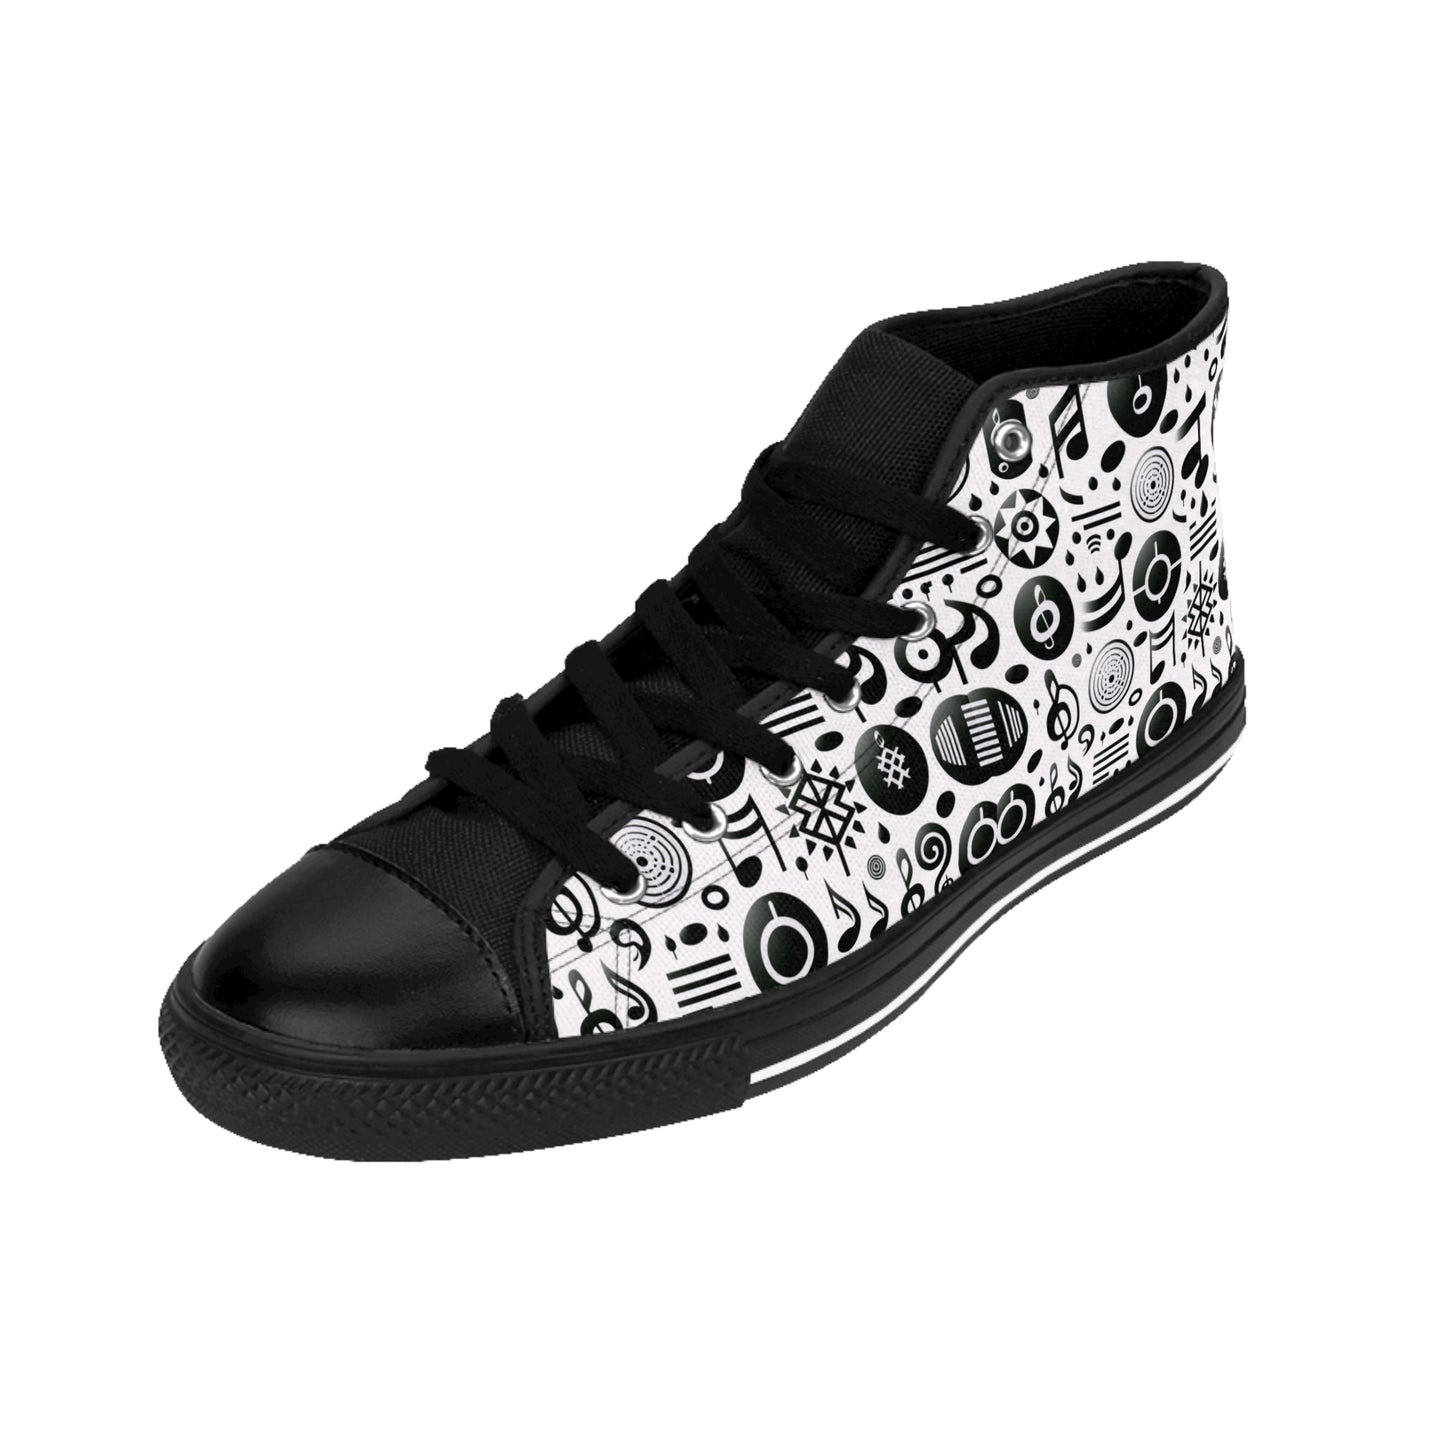 Music Black & White pattern - Men's High-Top Sneakers